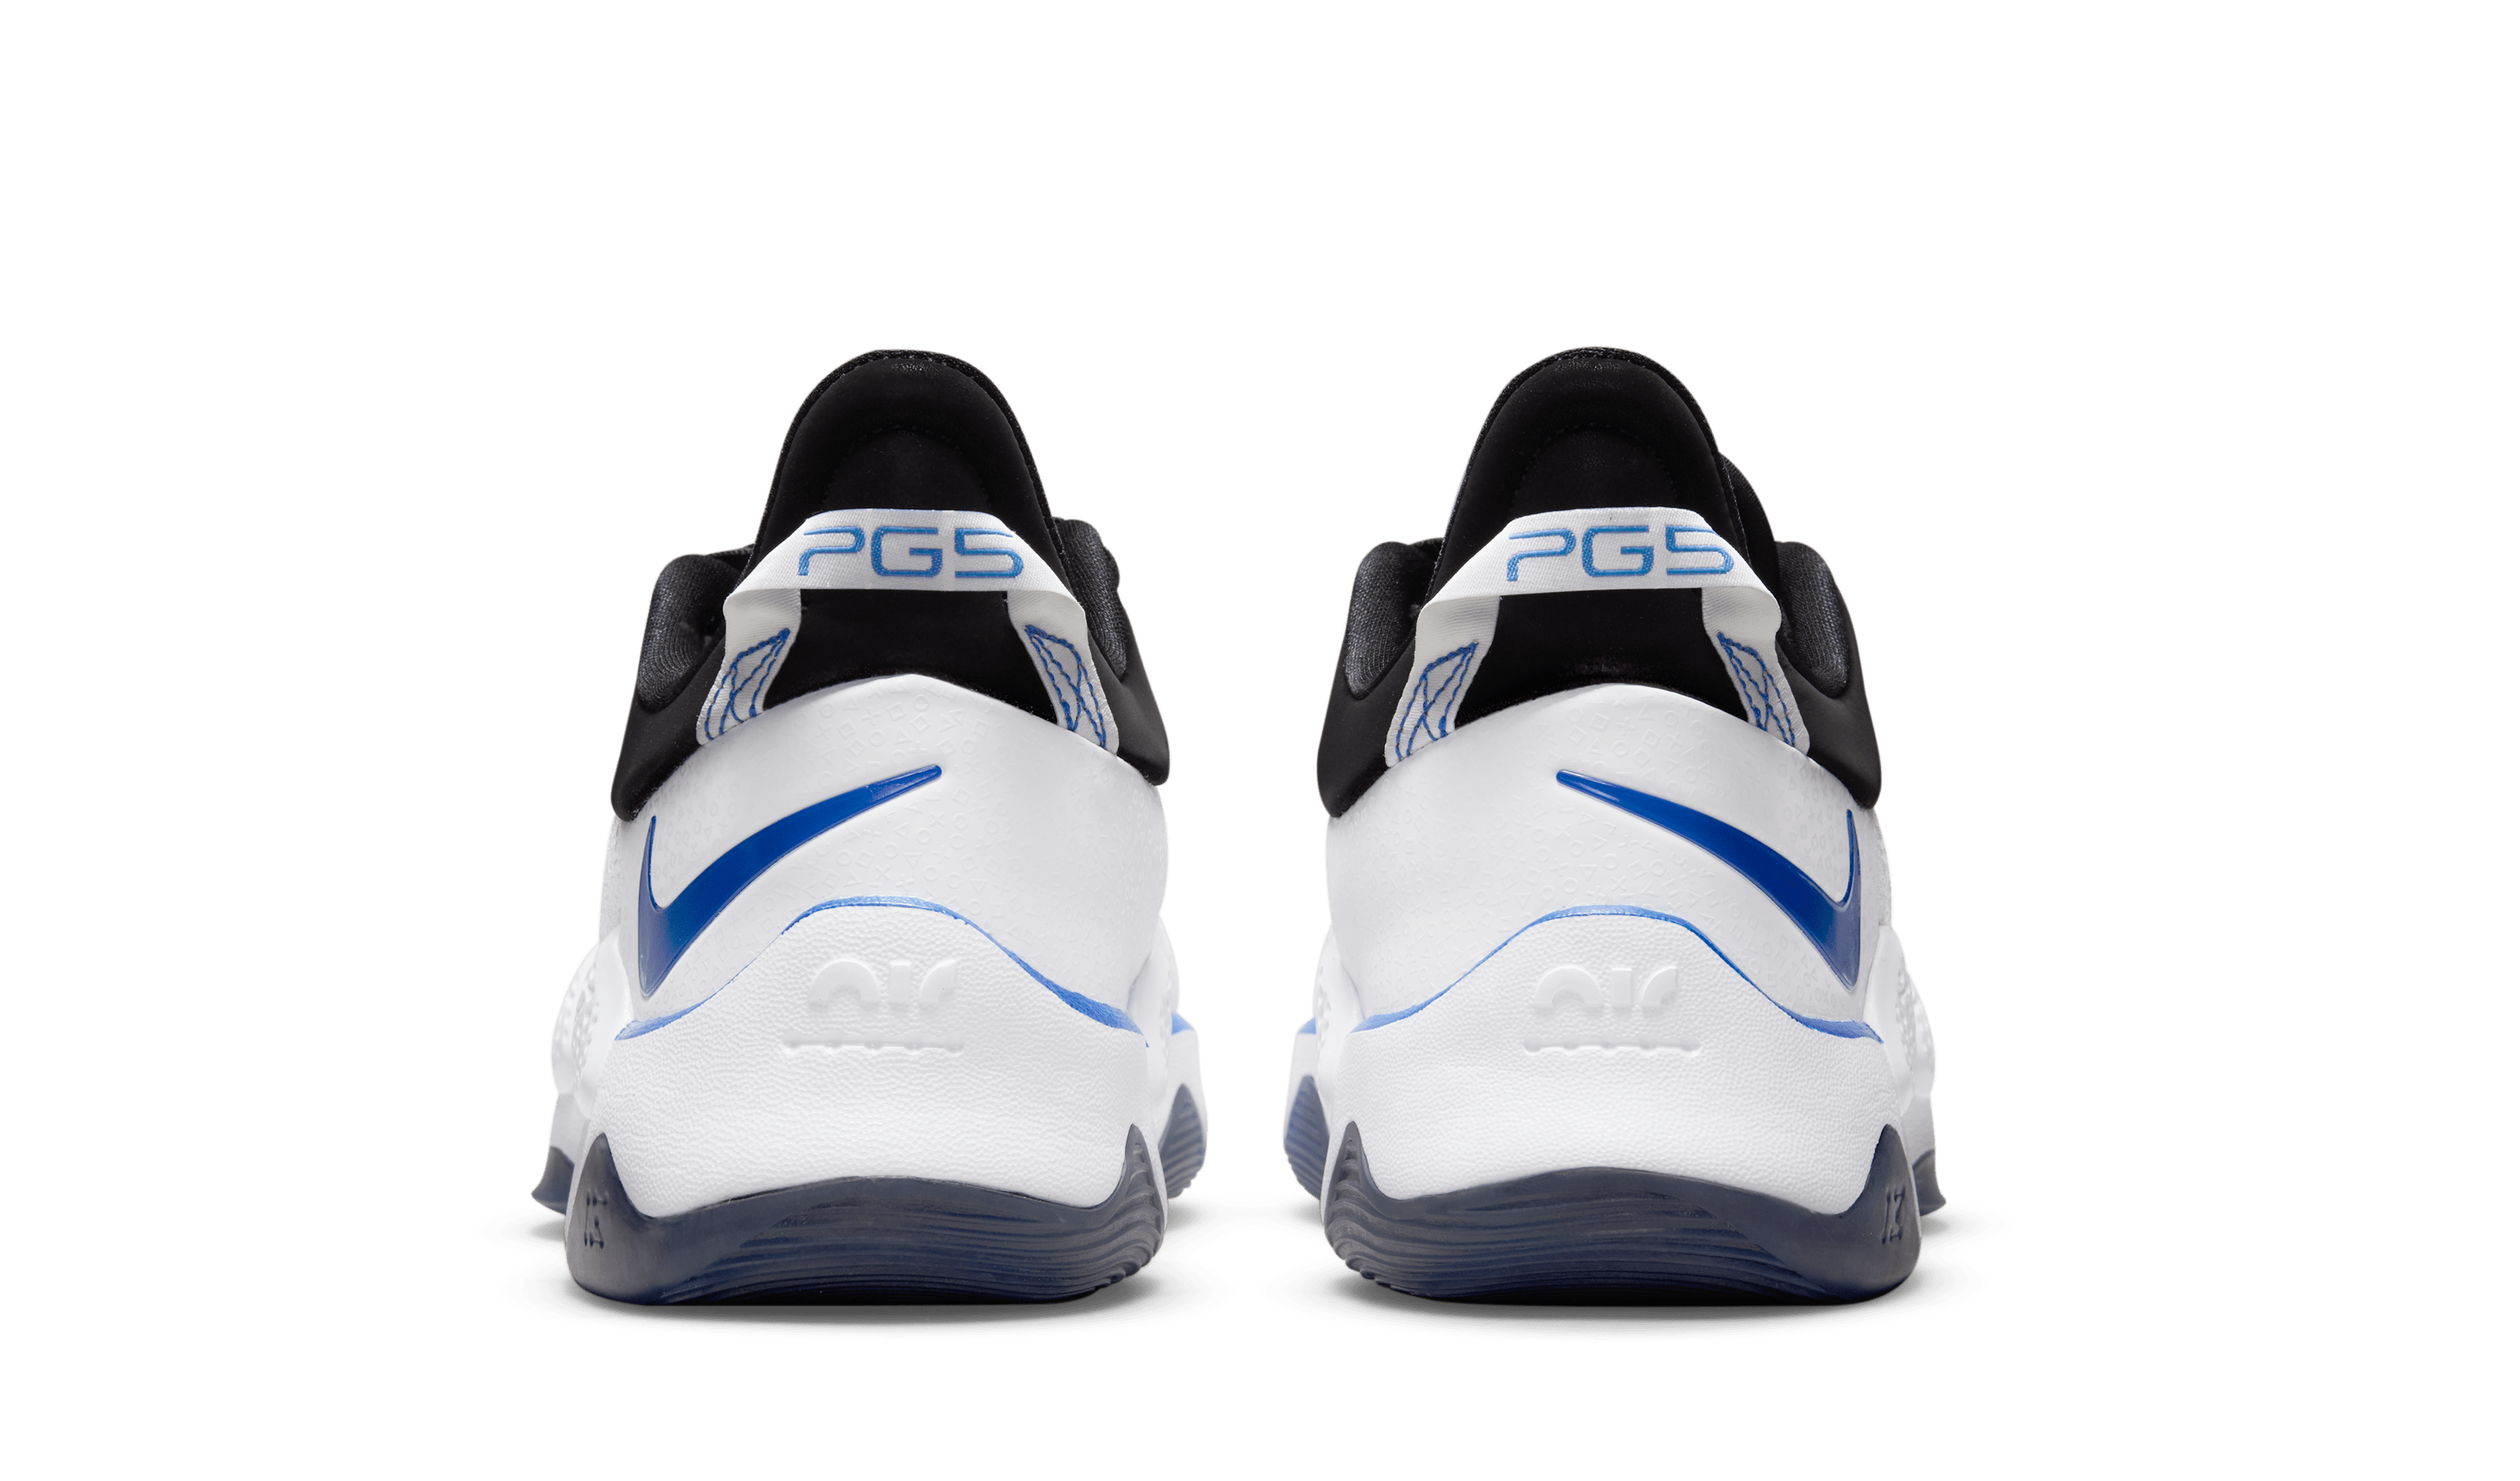 Playstation x Nike PG 5 'PS5' CW3144-100 (Heel)